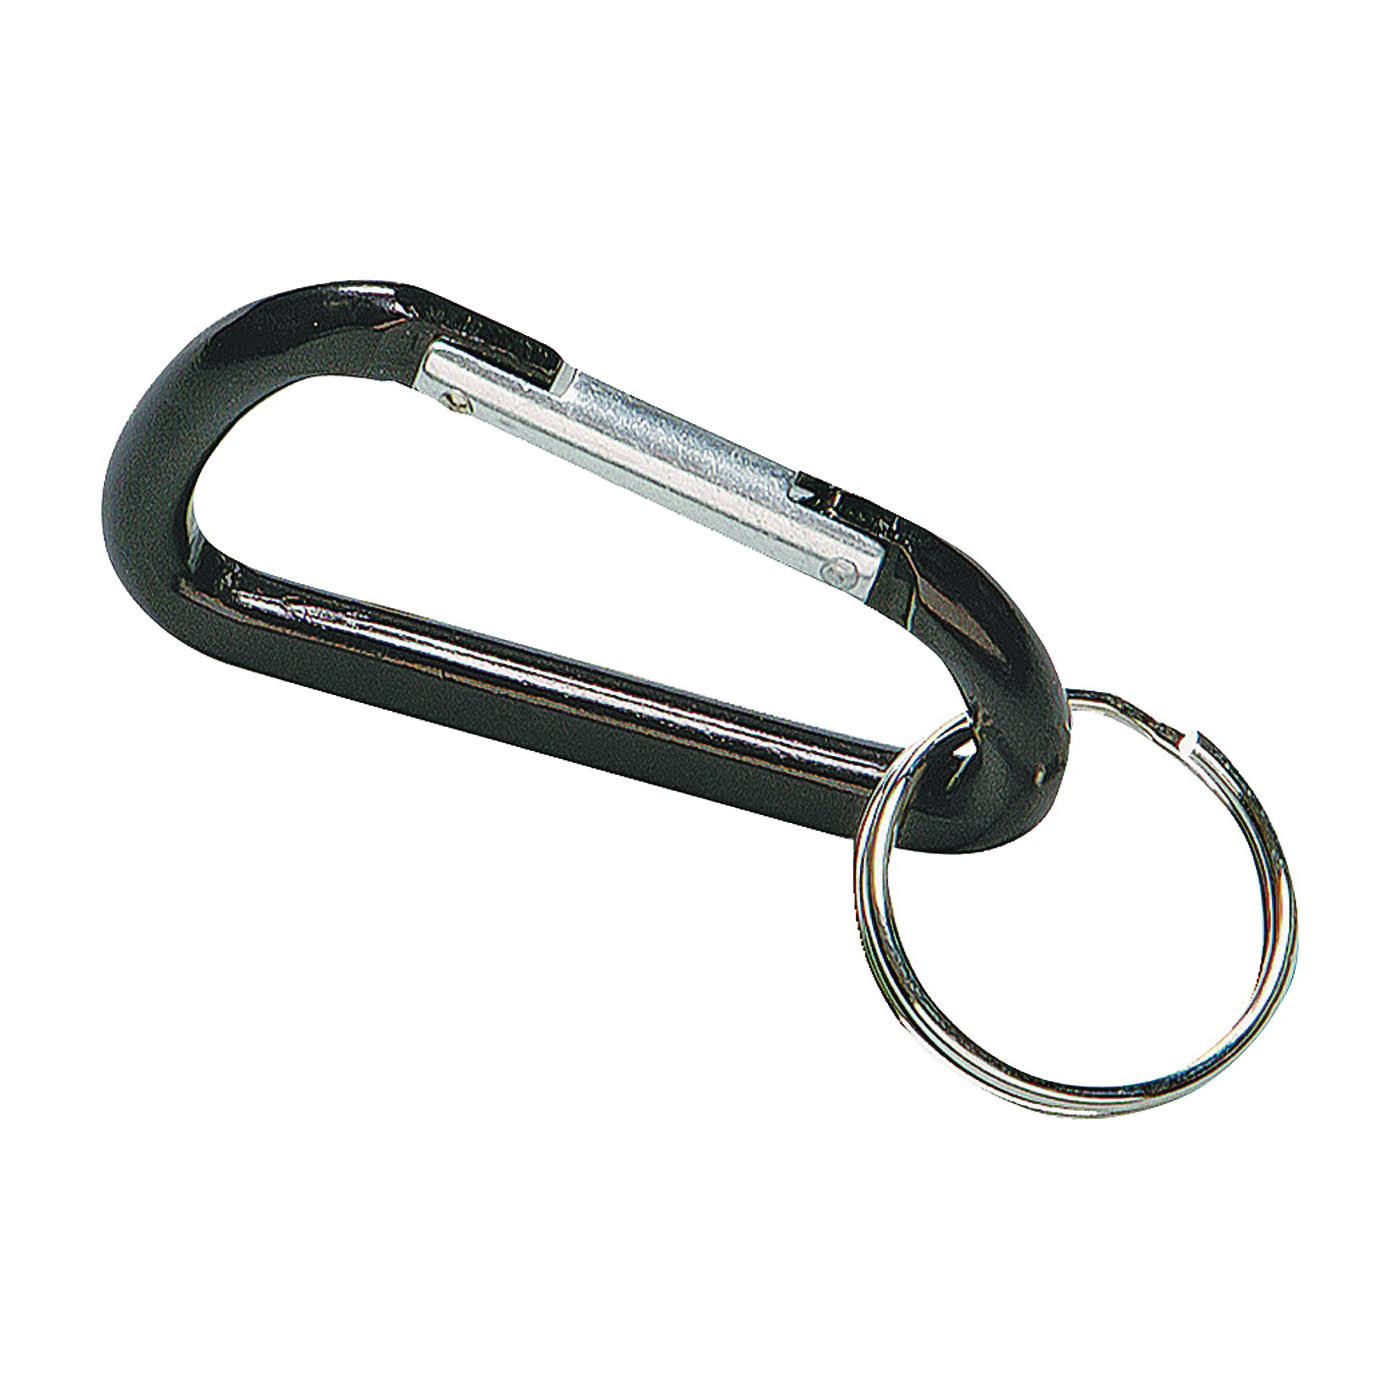 Hy-Ko Products C-Clip Aluminum Key Ring - 3 1/8", Large